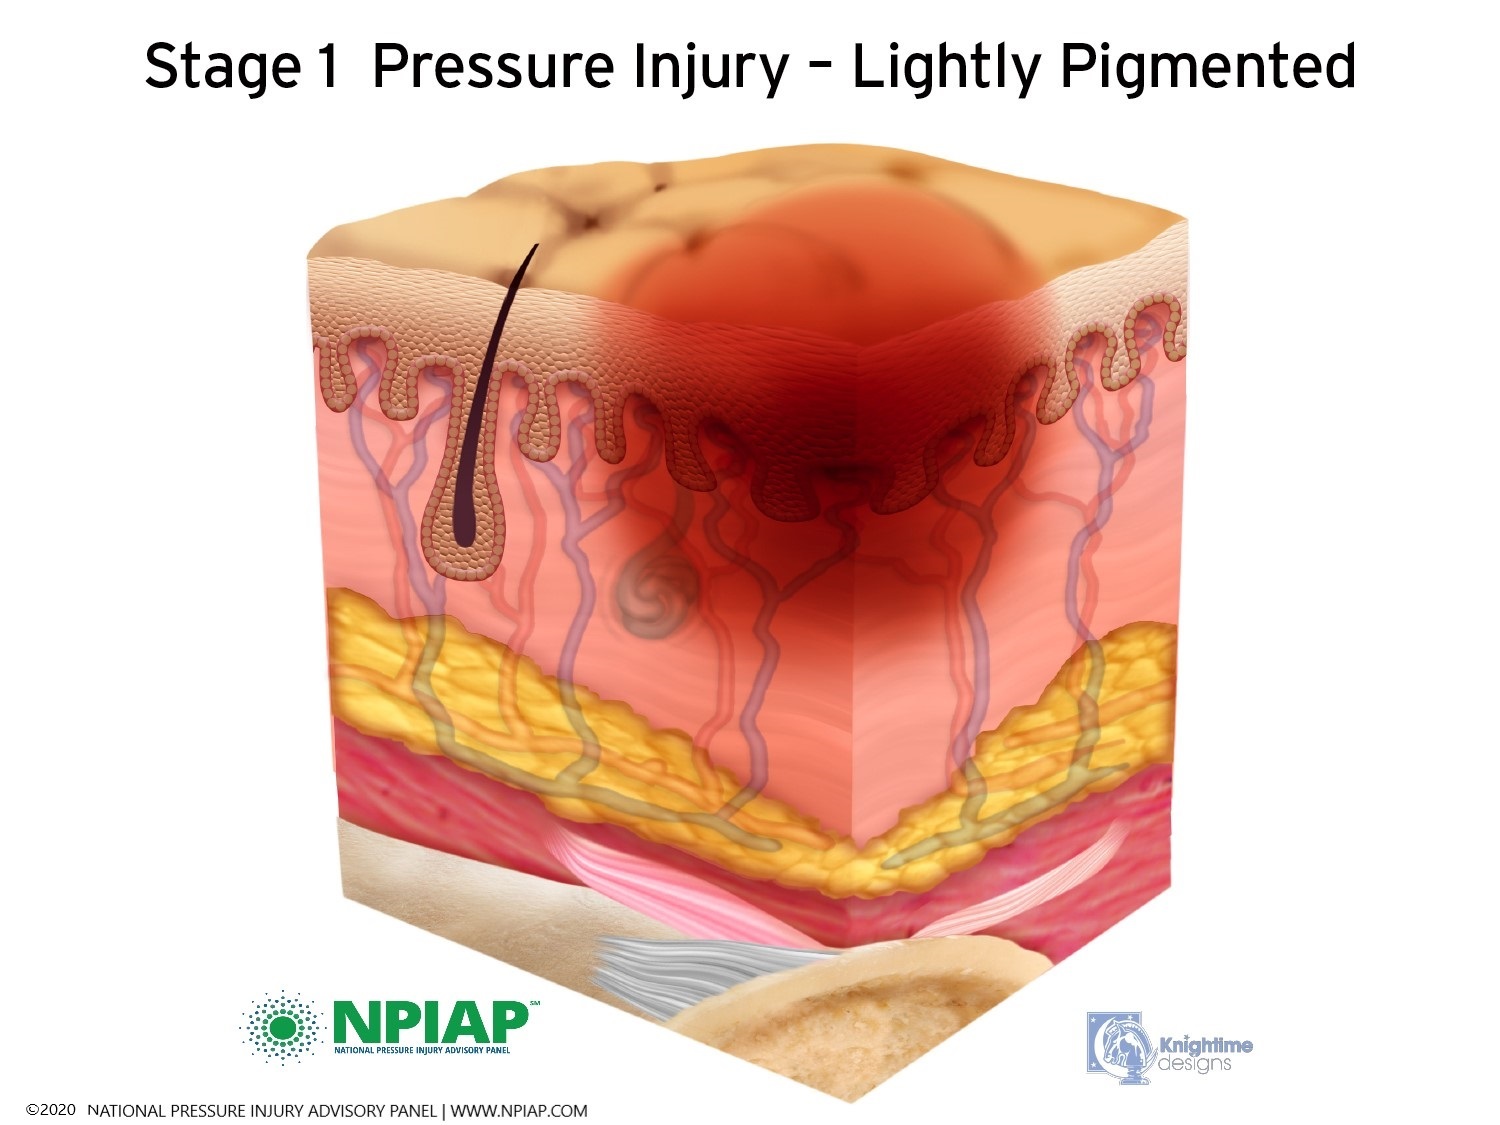 Stage 1 Pressure Injury - Lightly Pigmented